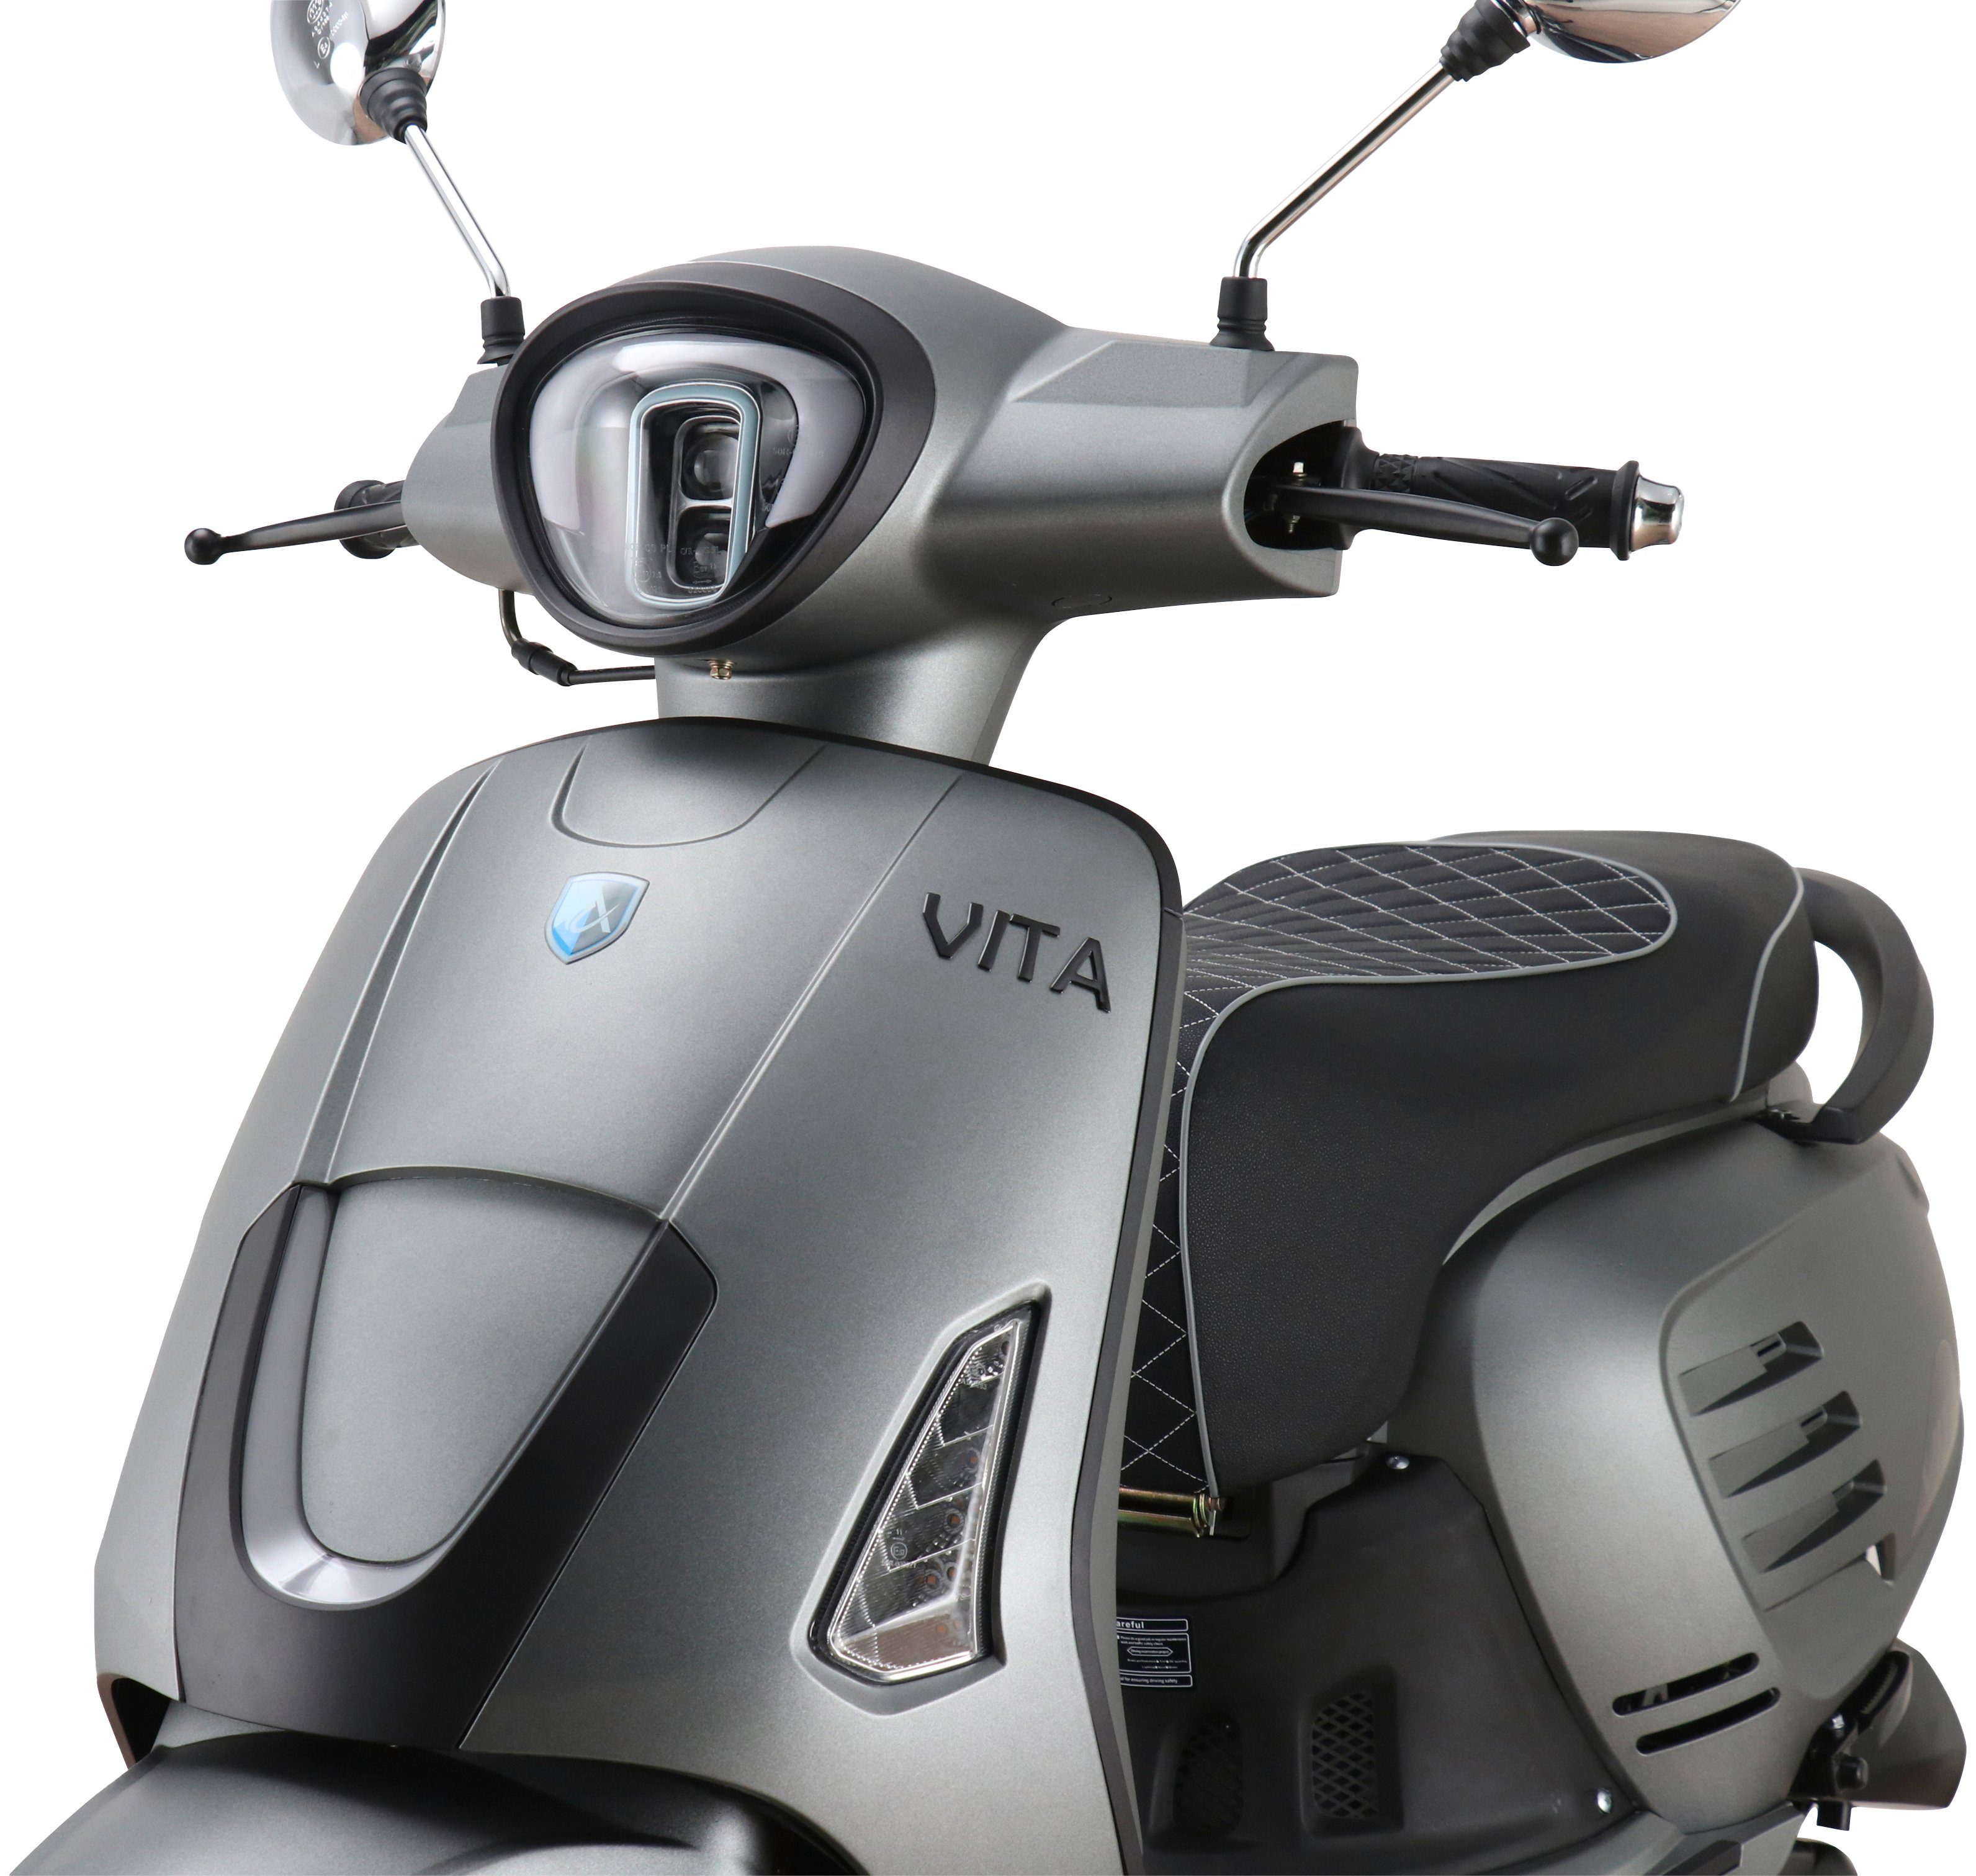 ccm, 45 Vita, Motors Motorroller 5 Alpha Euro 50 km/h,